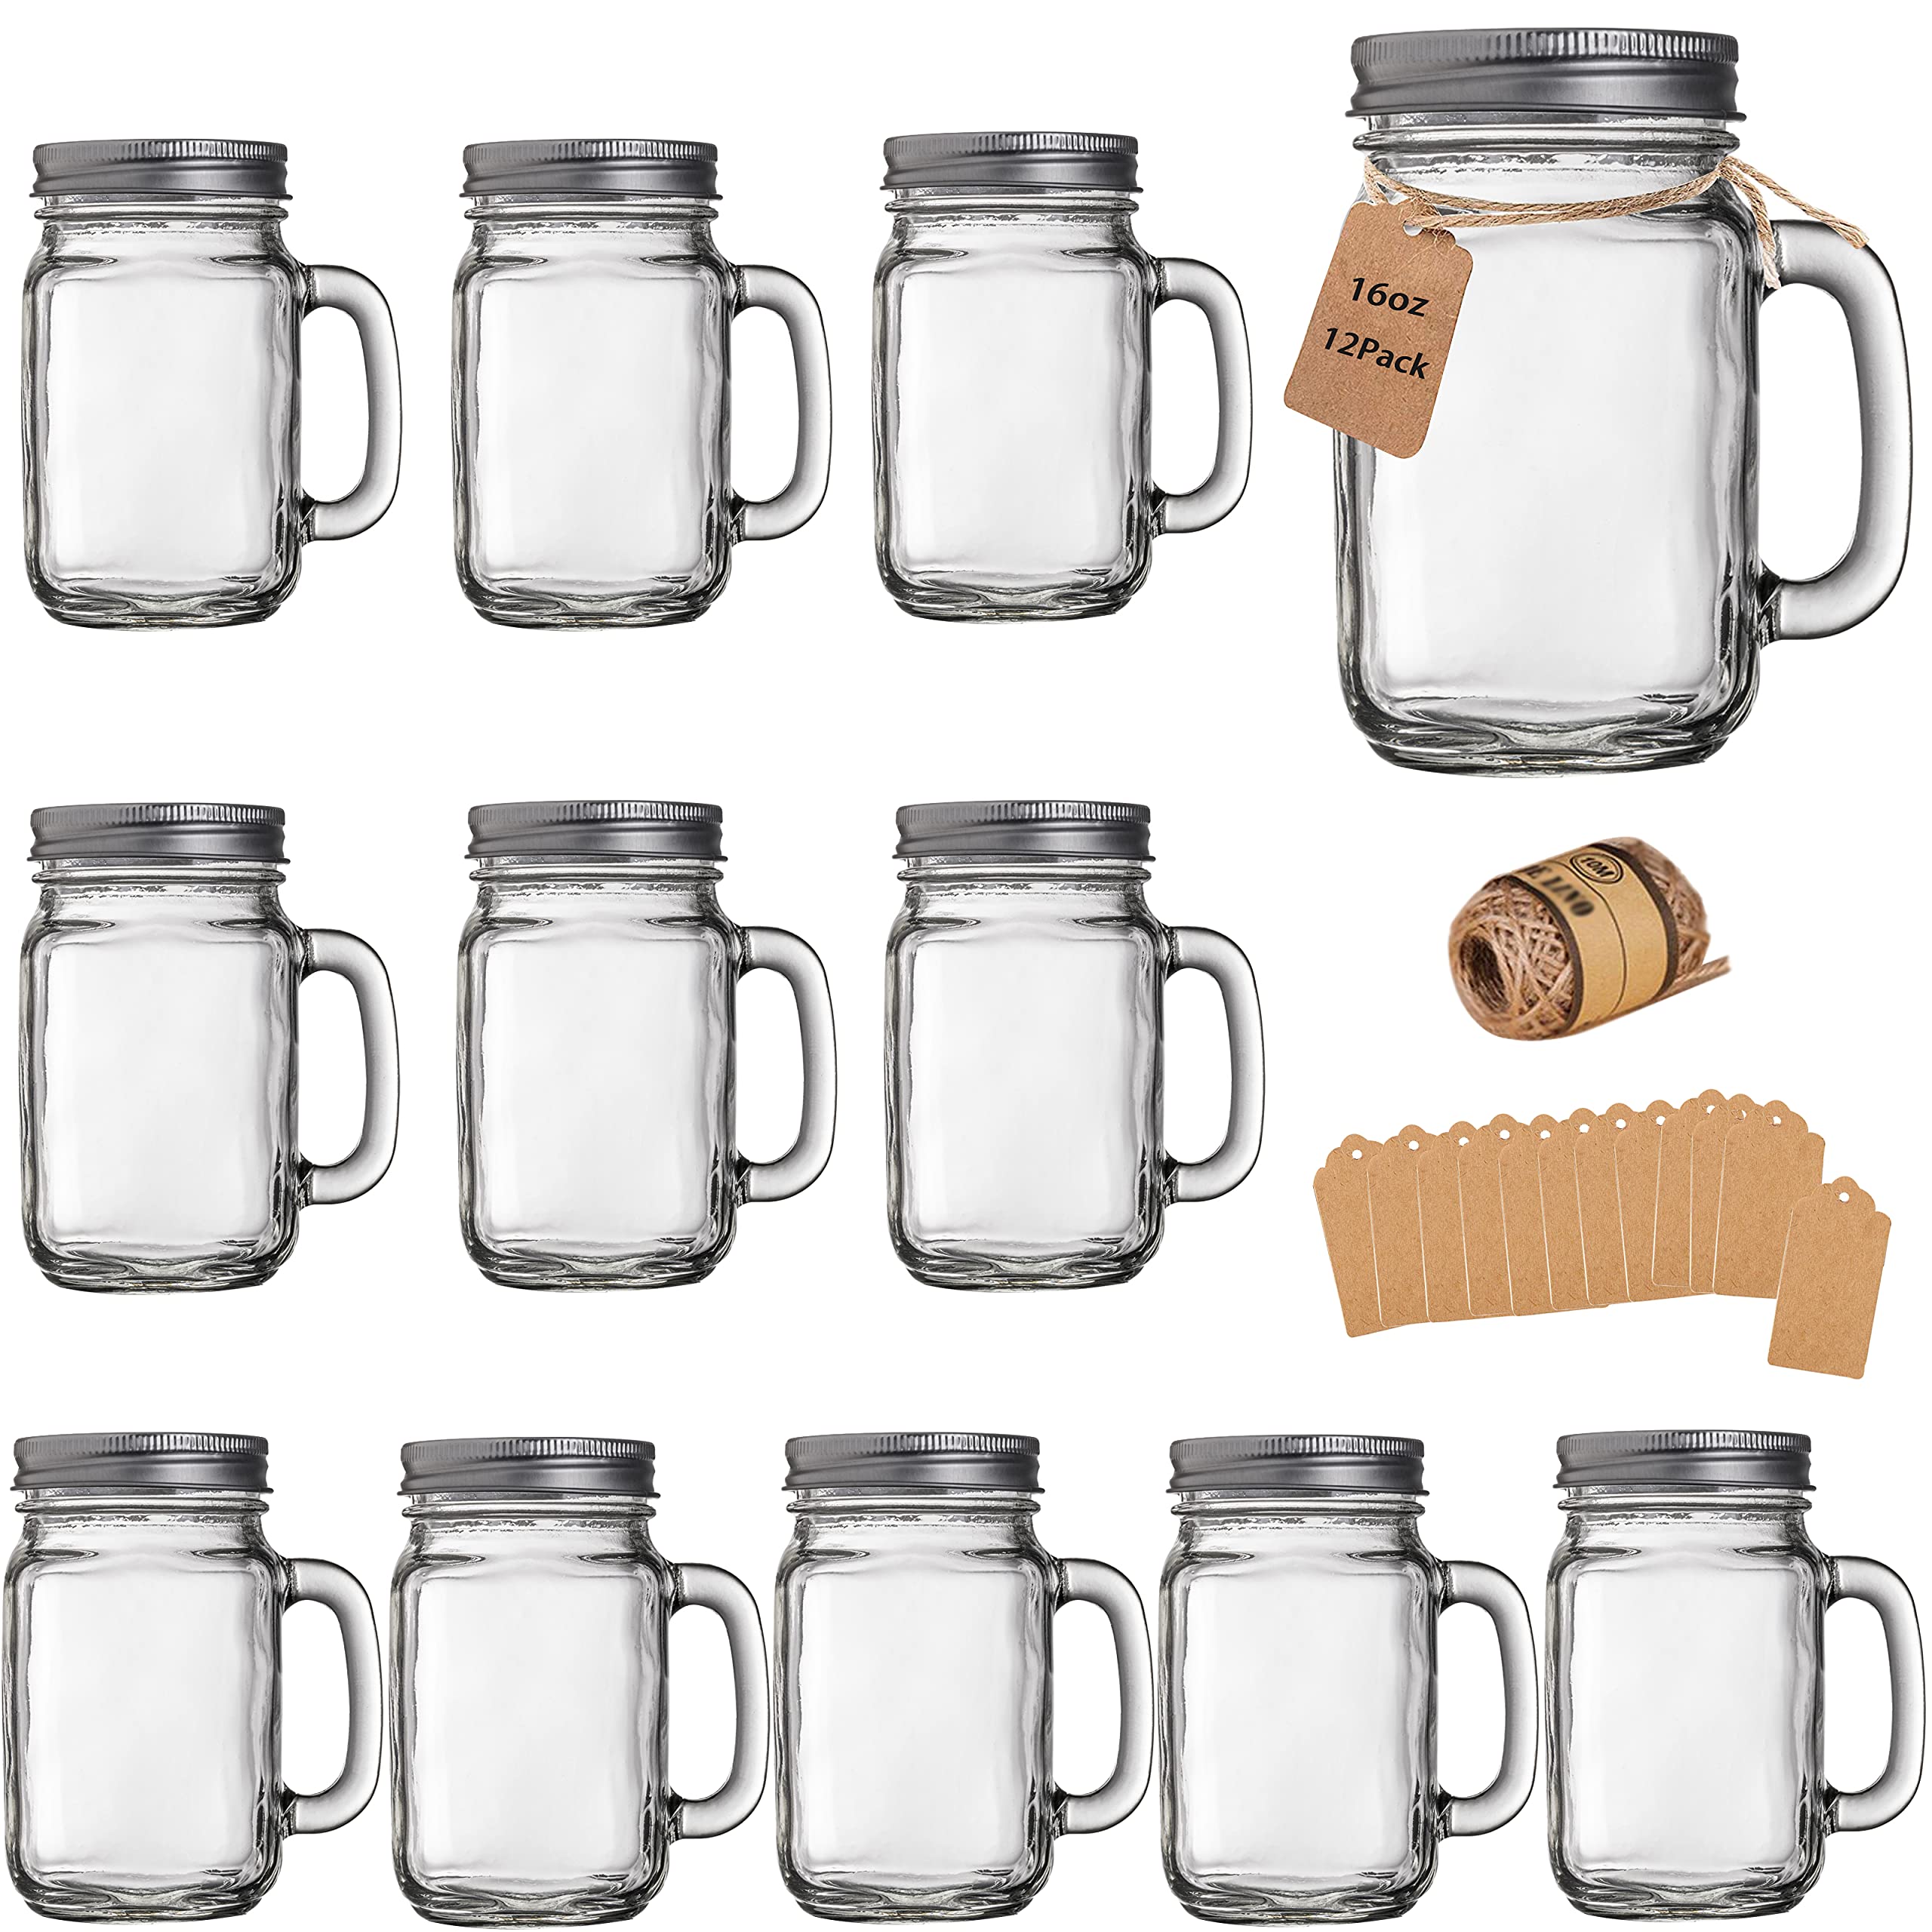 TANGLONG Mason Jar cups, Mason Jars With Handle And Lids, Mason Jar Drinking glasses, glass Mason Jar Mugs 16 oz -12 Pack